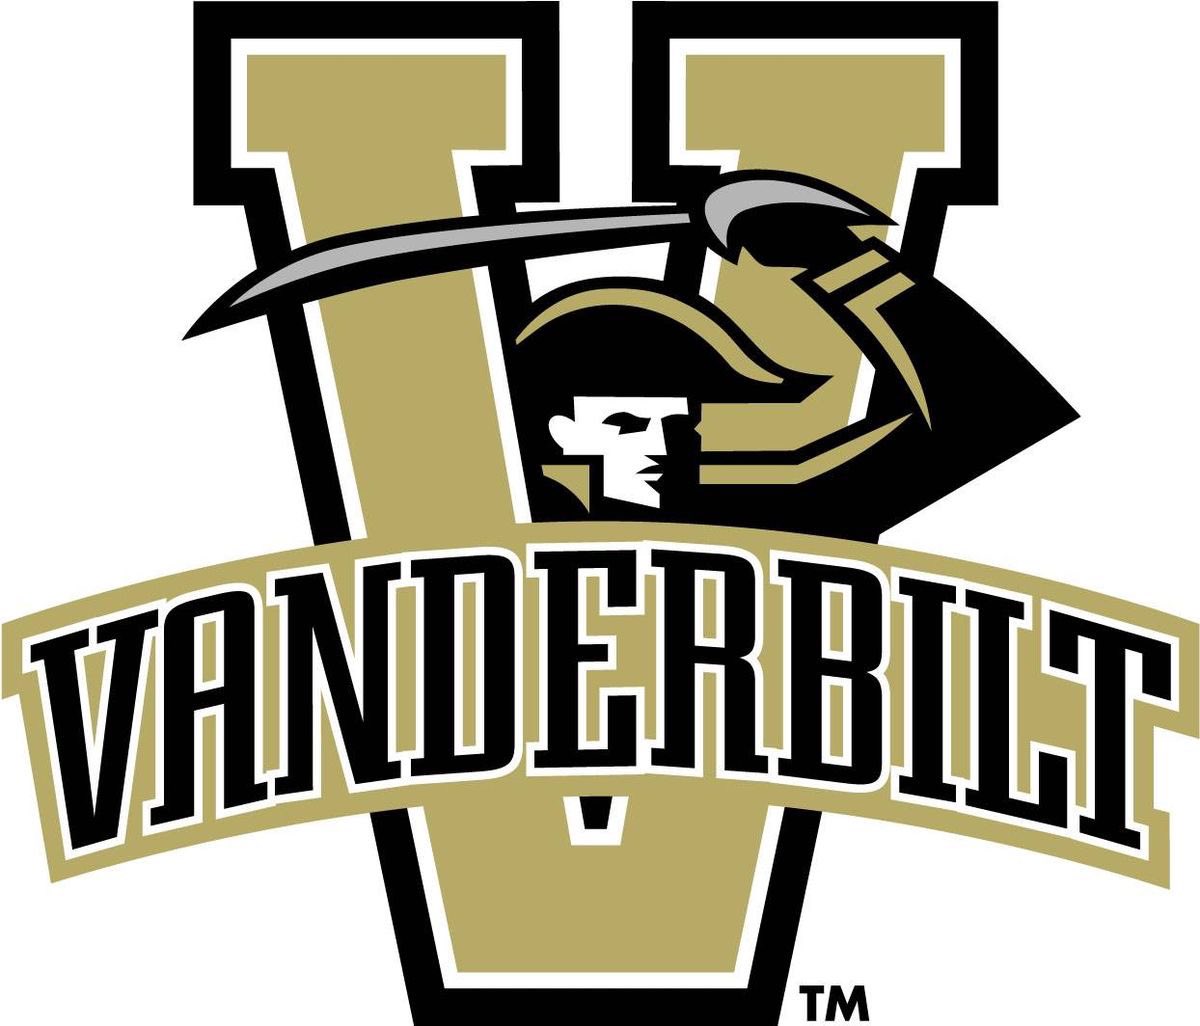 Blessed to receive an offer from Vanderbilt university🖤💛 @VandyFootball @Coach_Lezynski @CoachAlexBailey